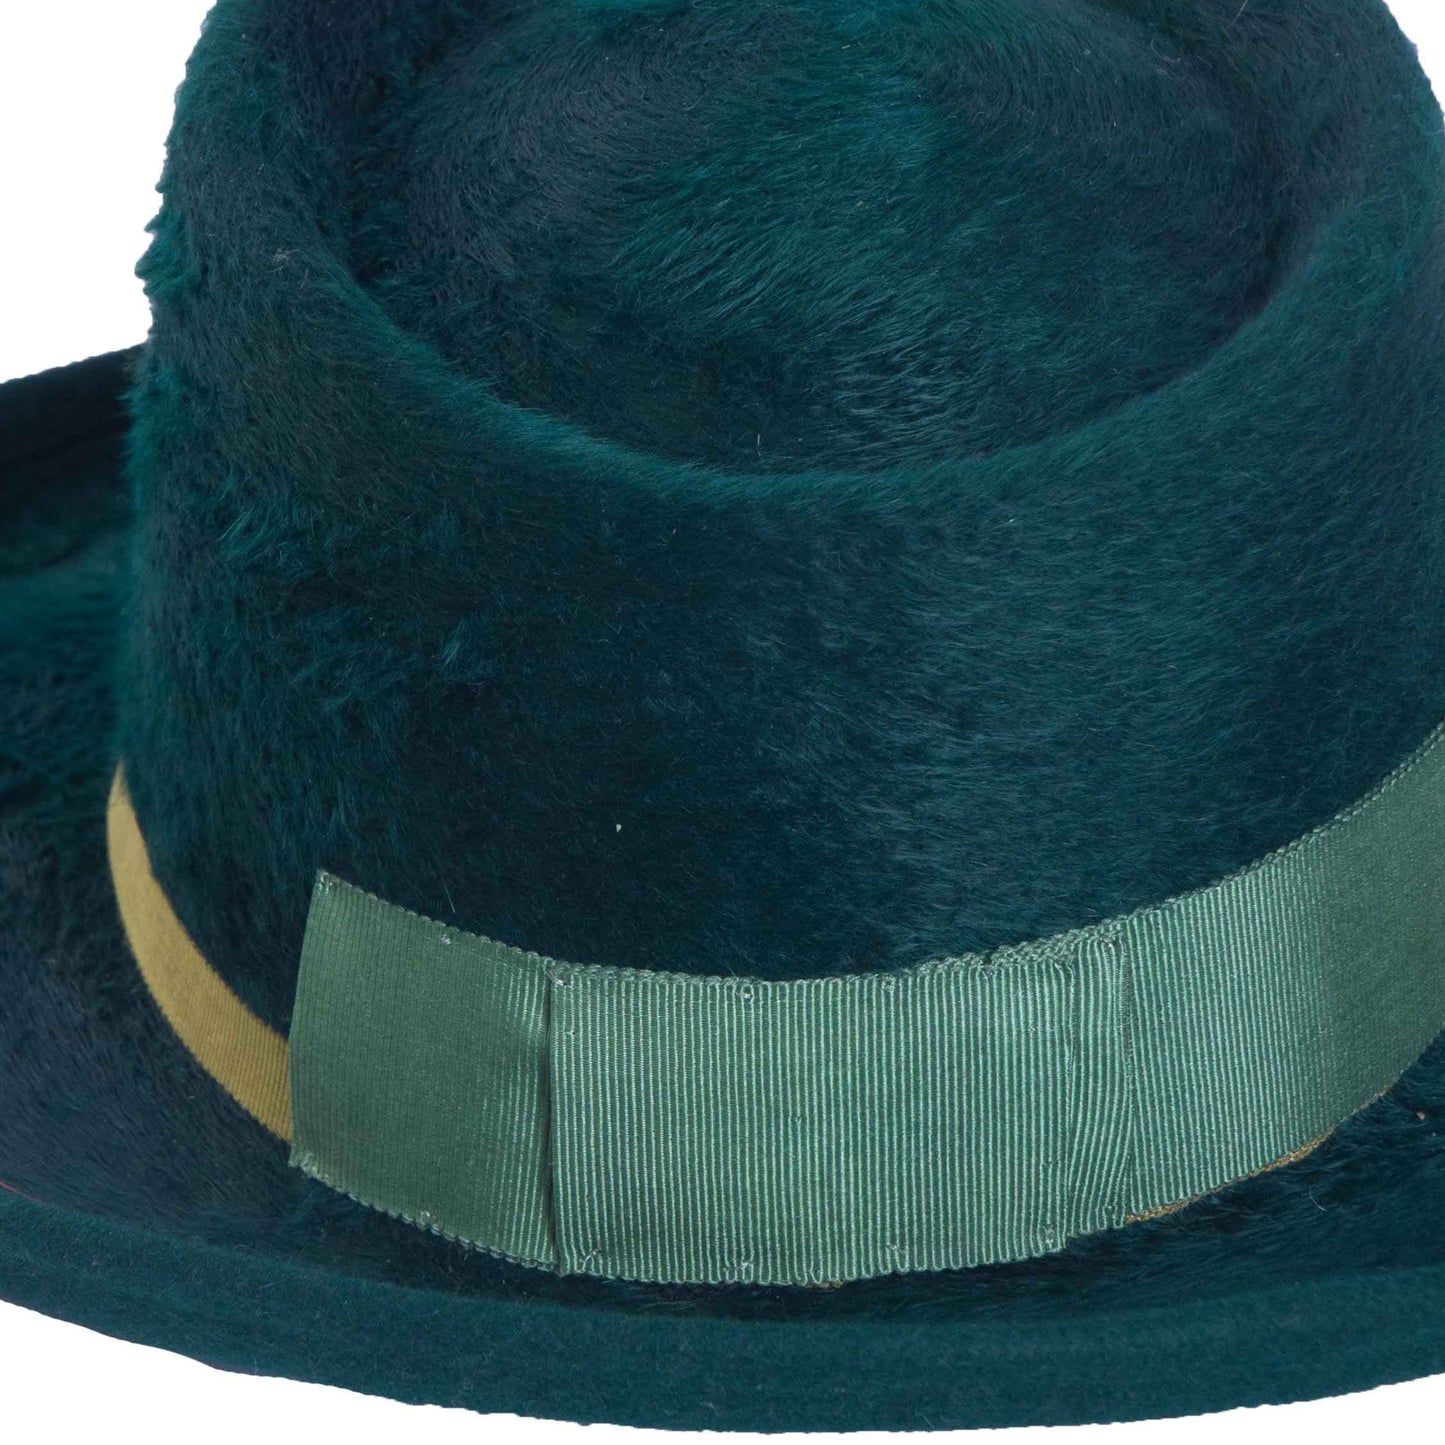 Kenzo, Melusine Felt Hat, Green